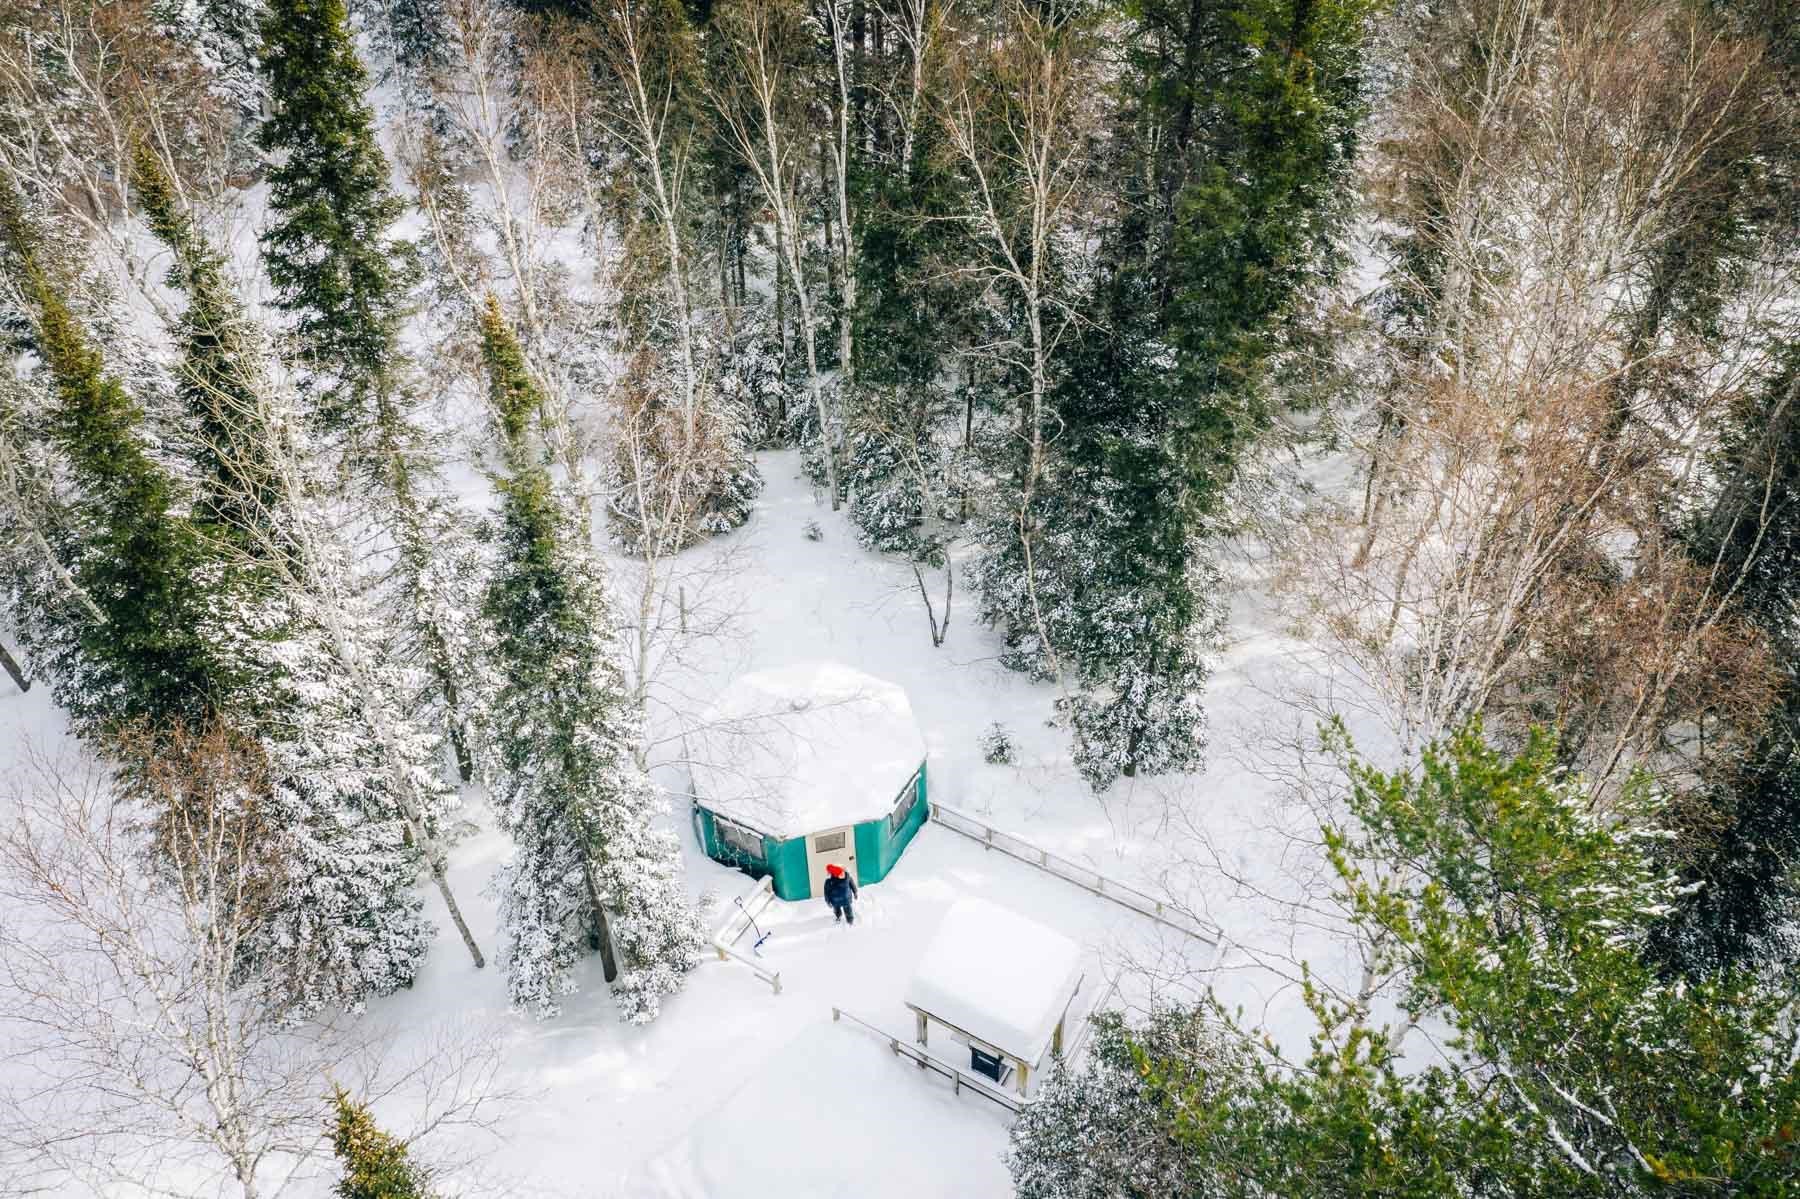 Bird's eye view of a Windy Lake yurt